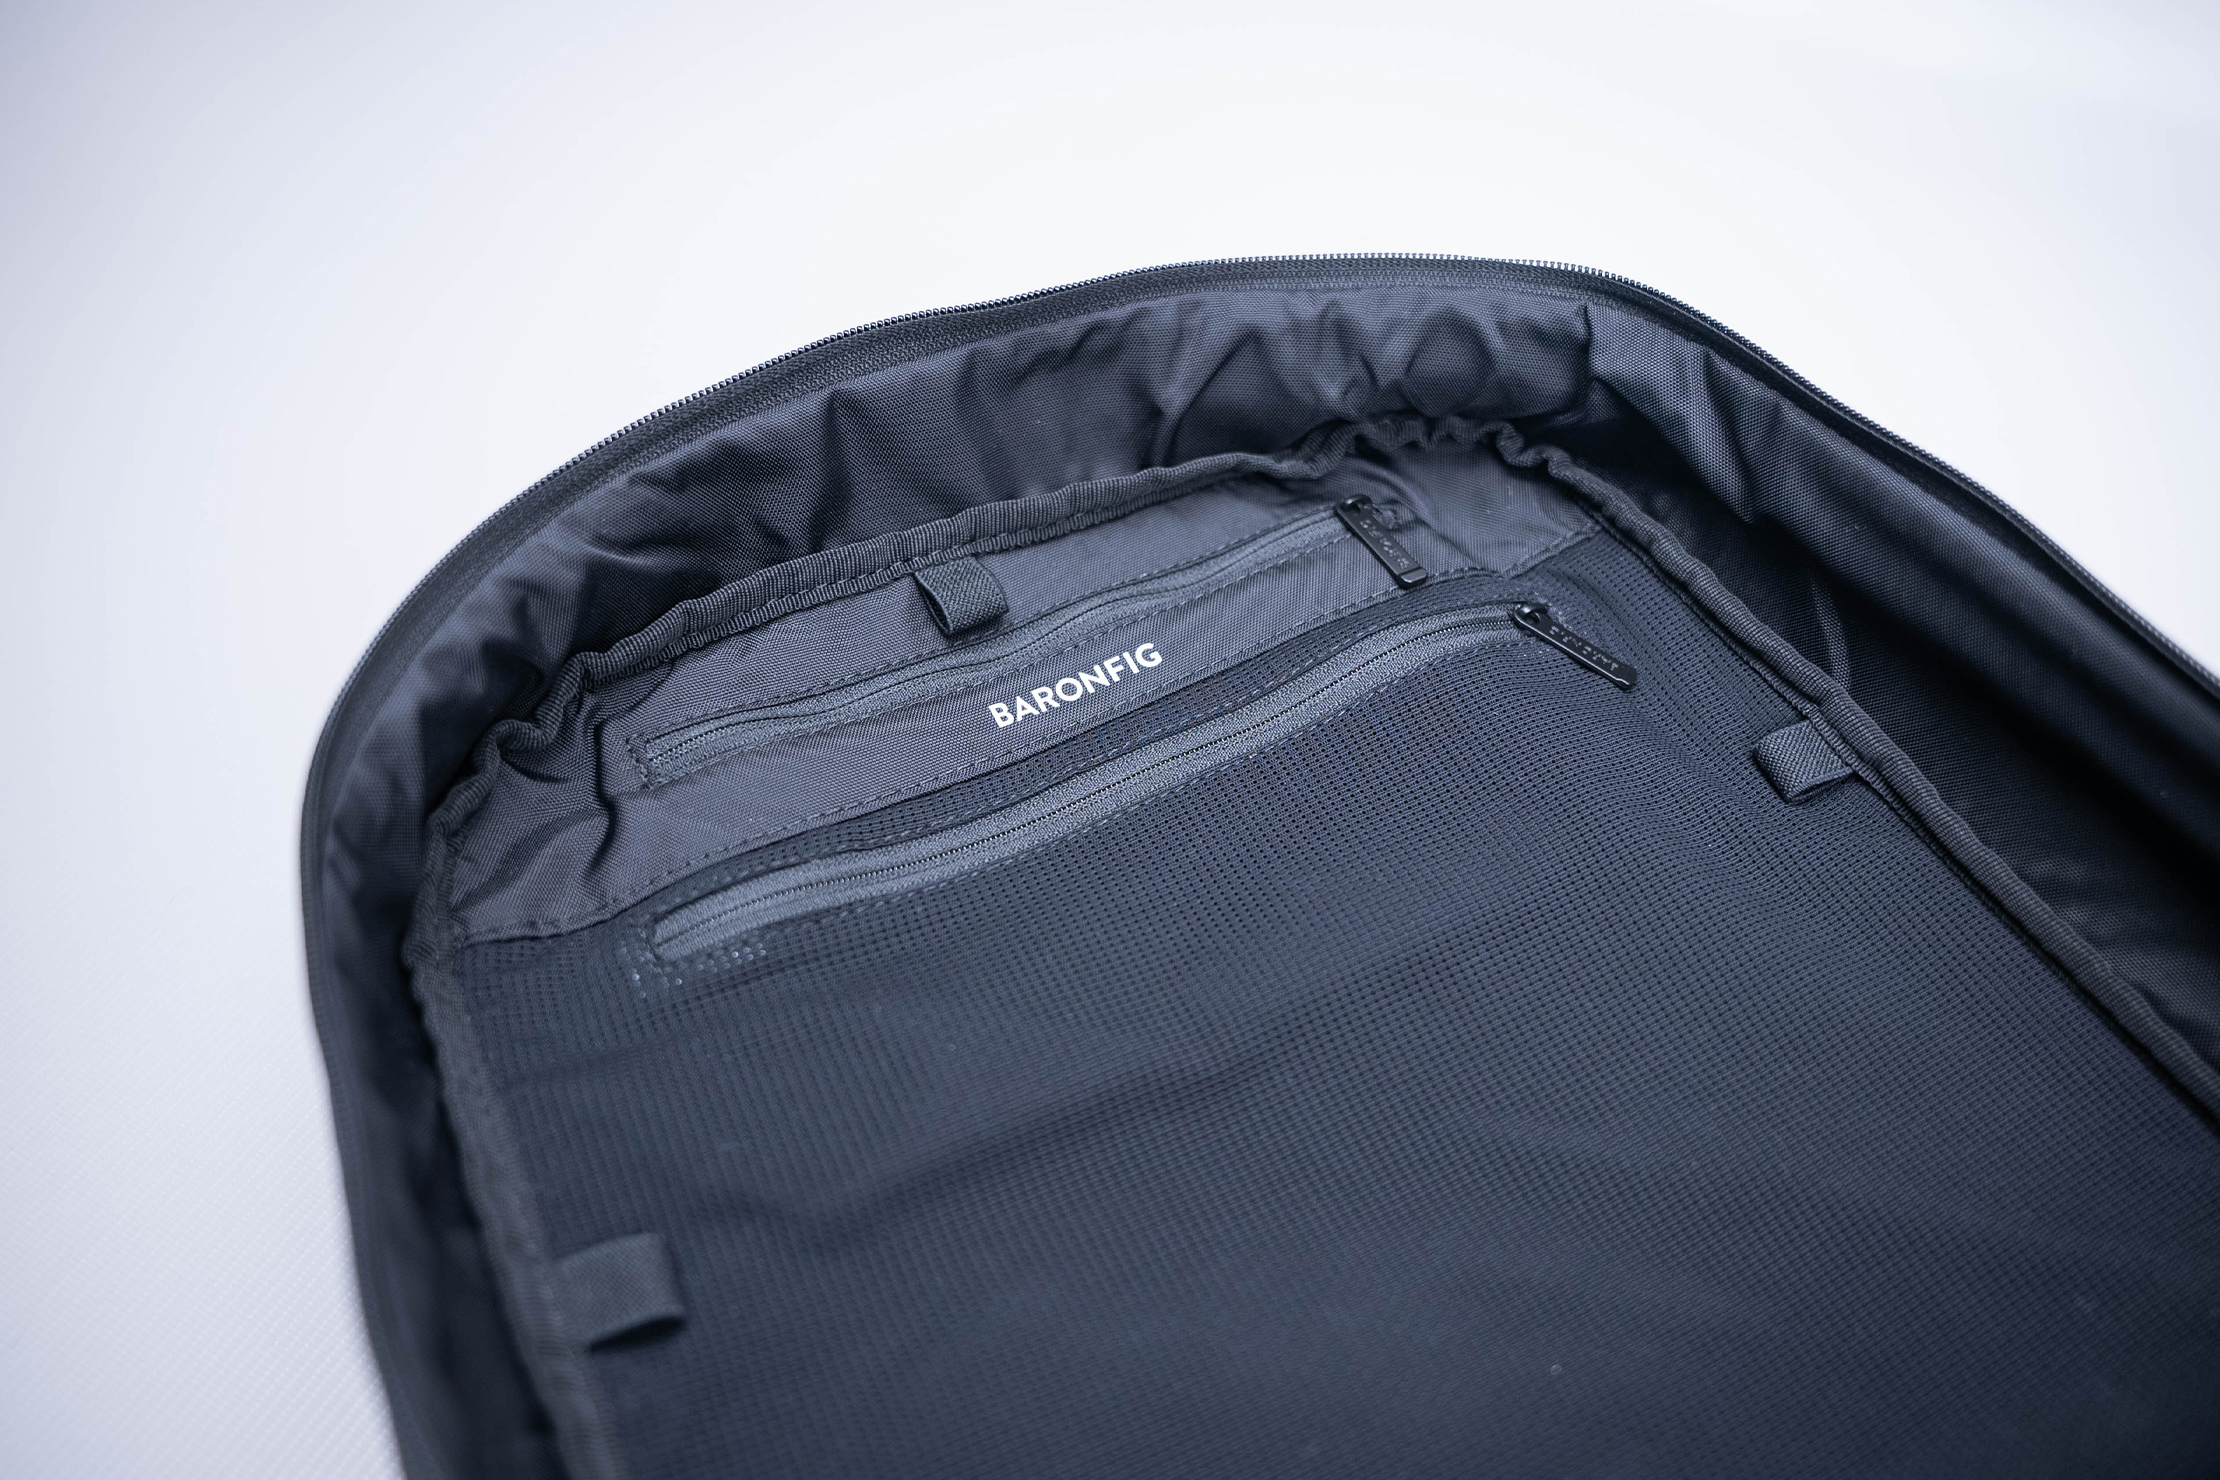 Baronfig Venture Backpack 3.0 Interior Brand